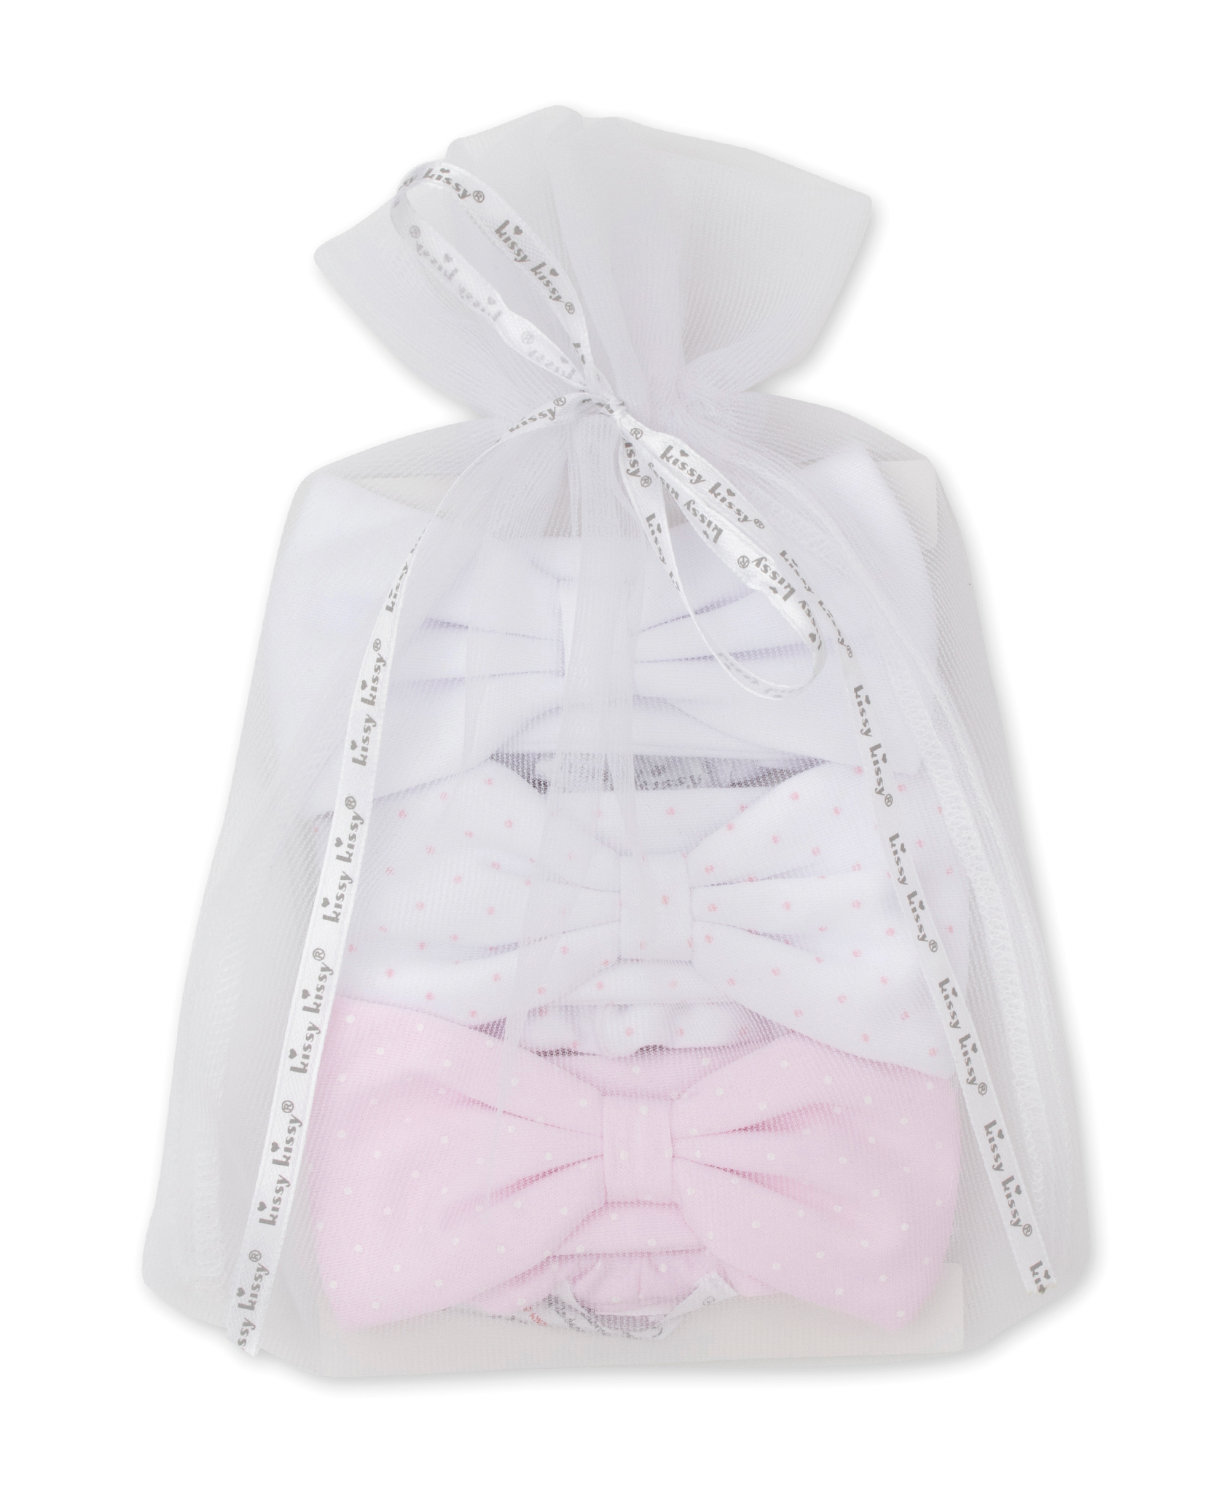 3 Piece Infant Headband Set, Pink Dot